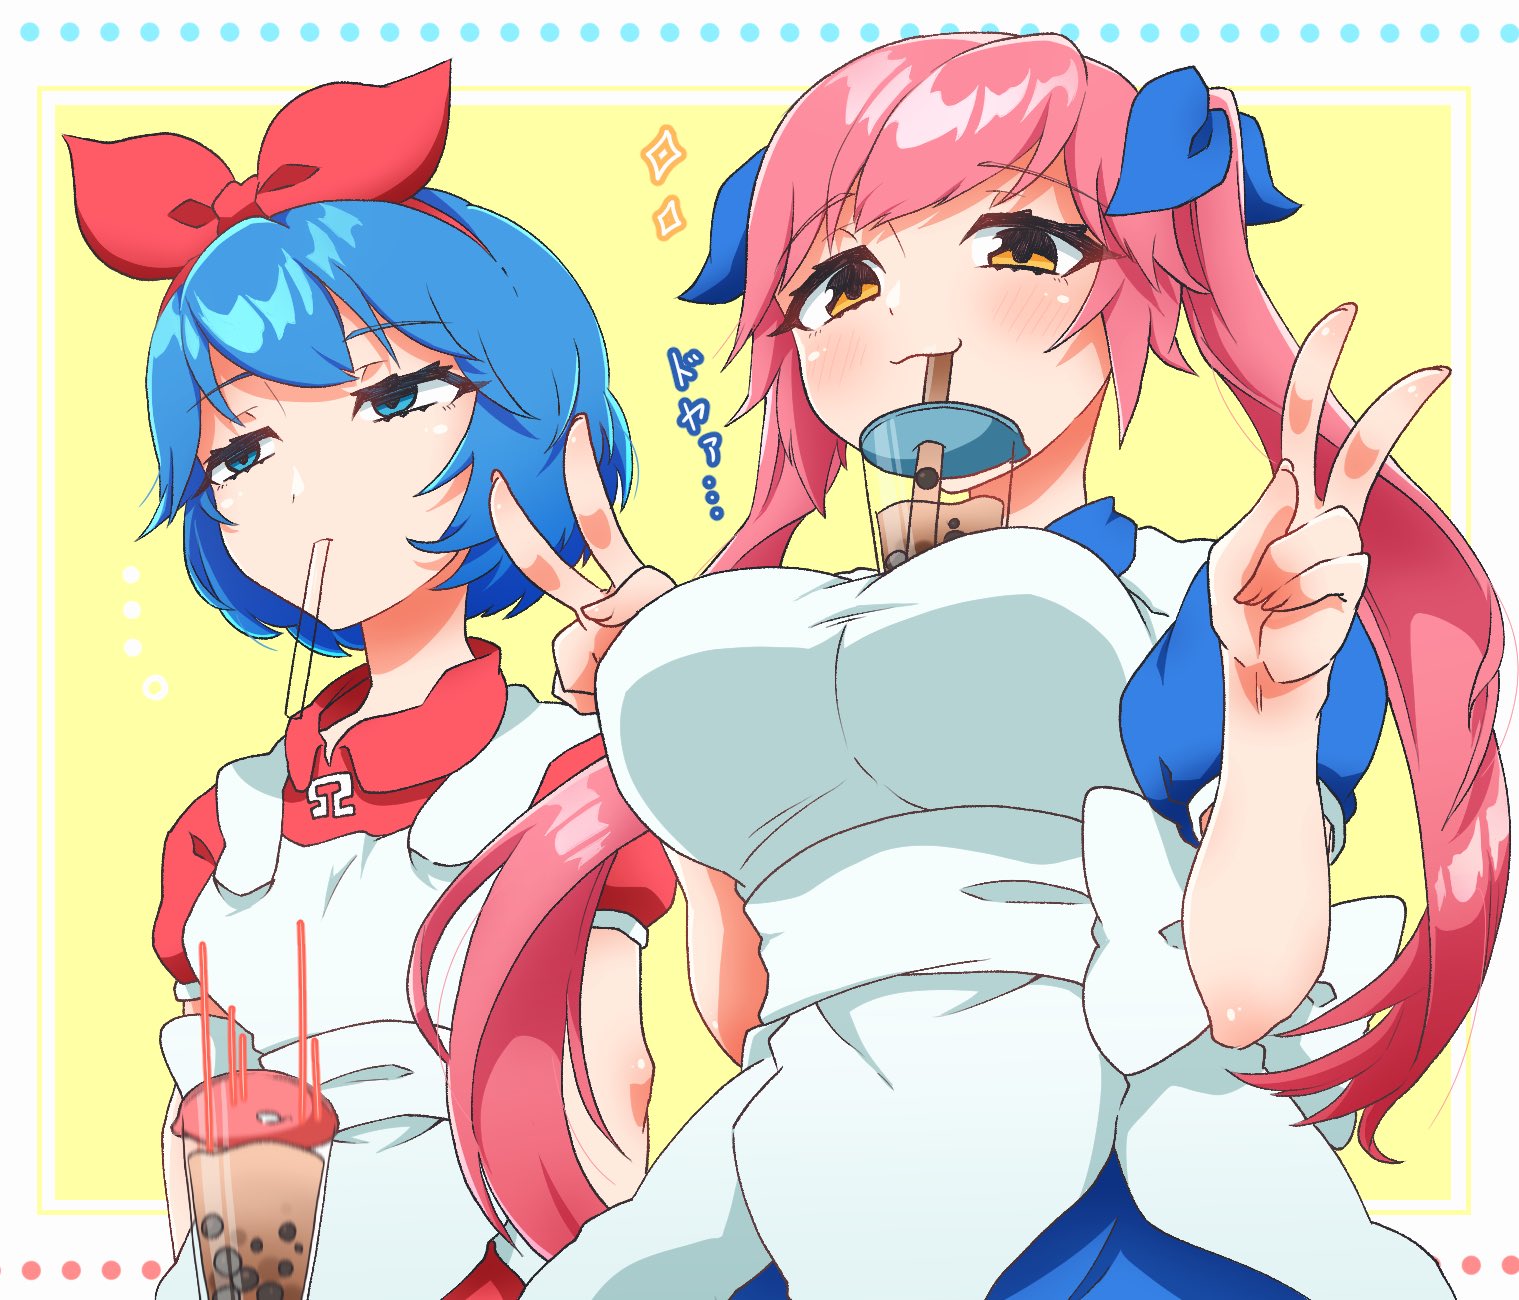 omega rio and omega rei (omega sisters) drawn by sakuramochi_( 